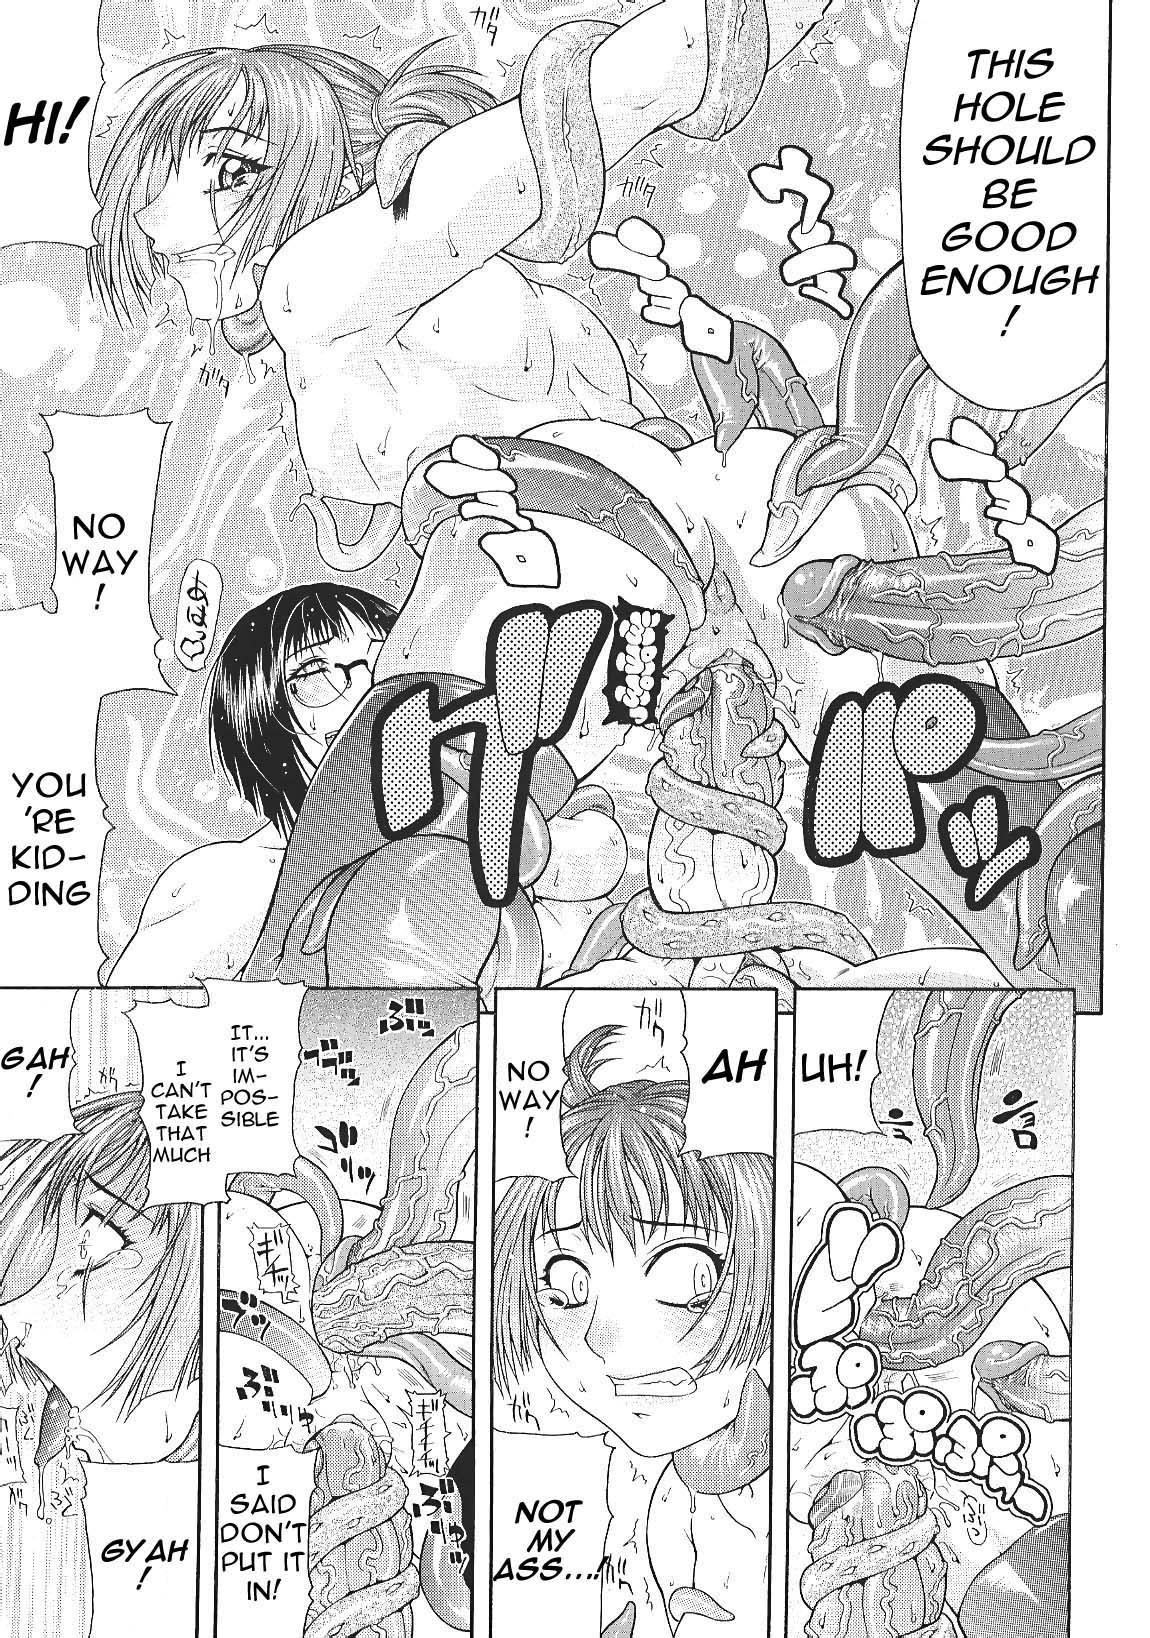 Gura Nyuutou - Escape chapter 1 [translated and uncensored] 